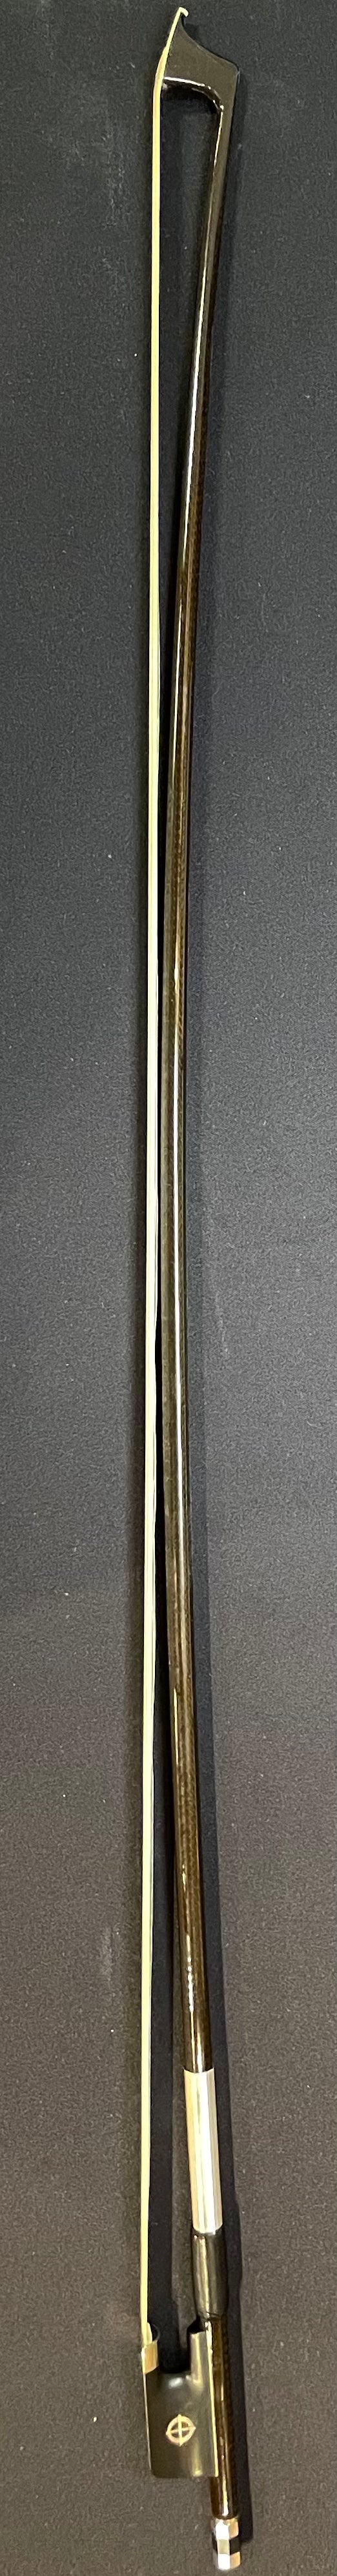 4/4 Violin Bow - Carbon Fiber CodaBow Luma Model